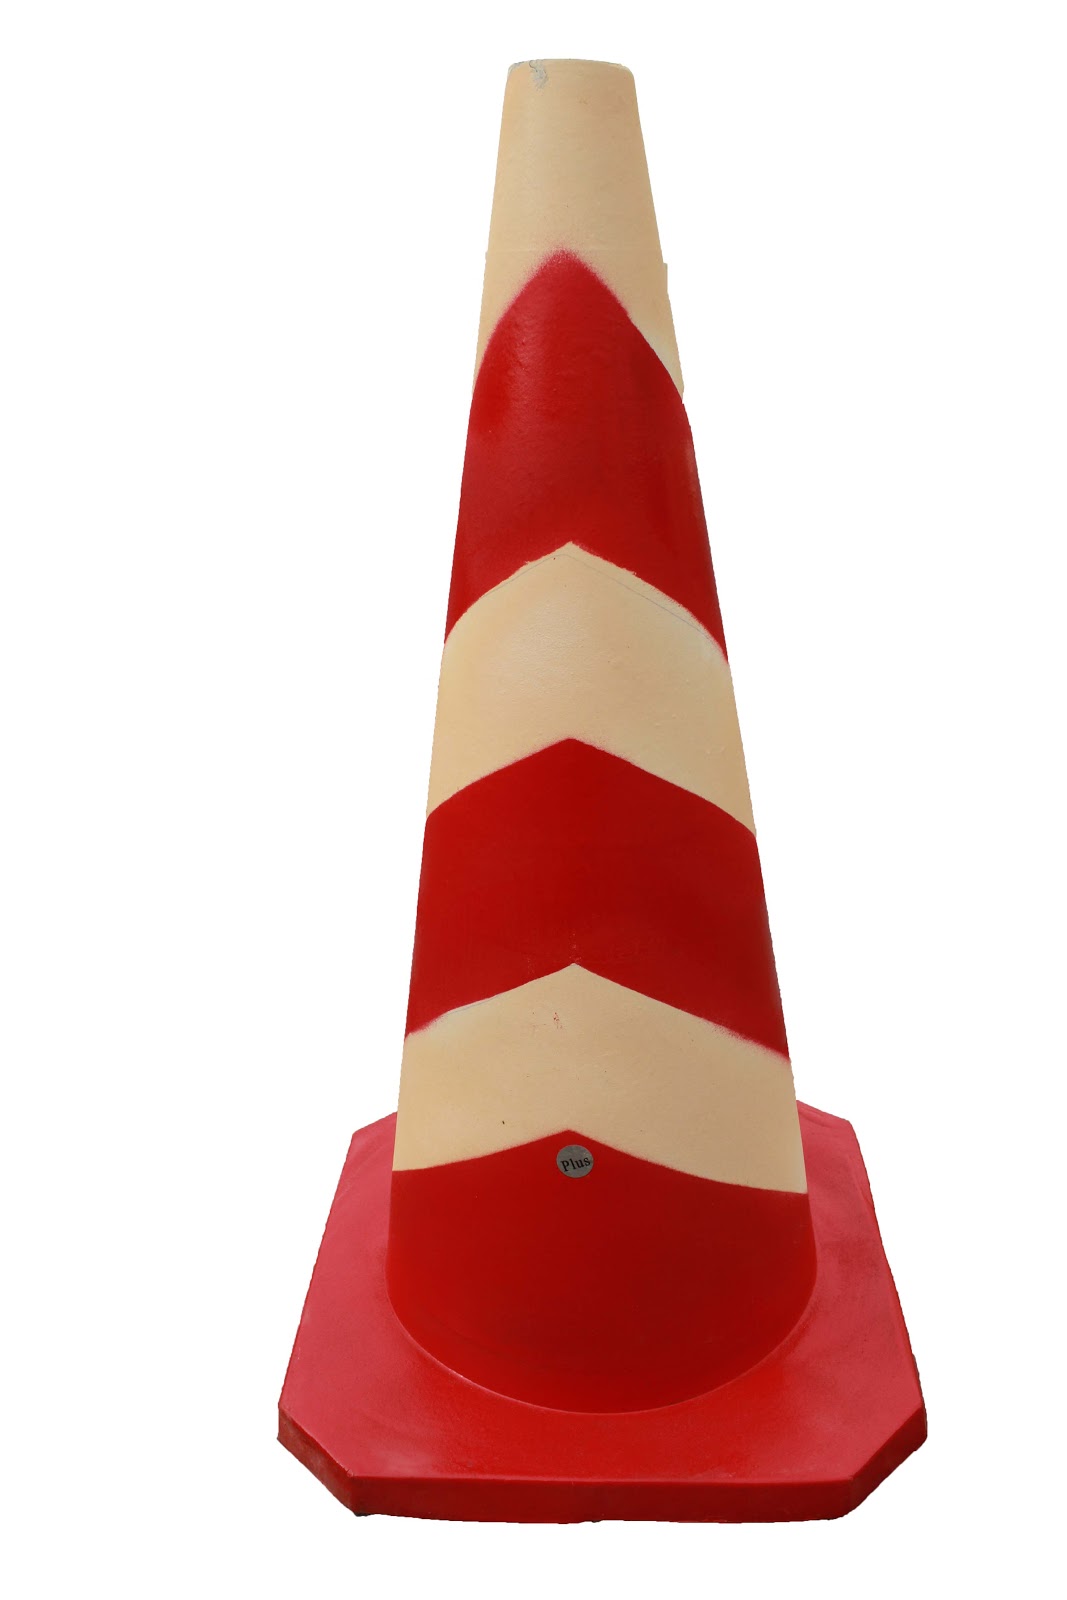 Round Rubber Cone Black-Yellow/Red-White 70 CM